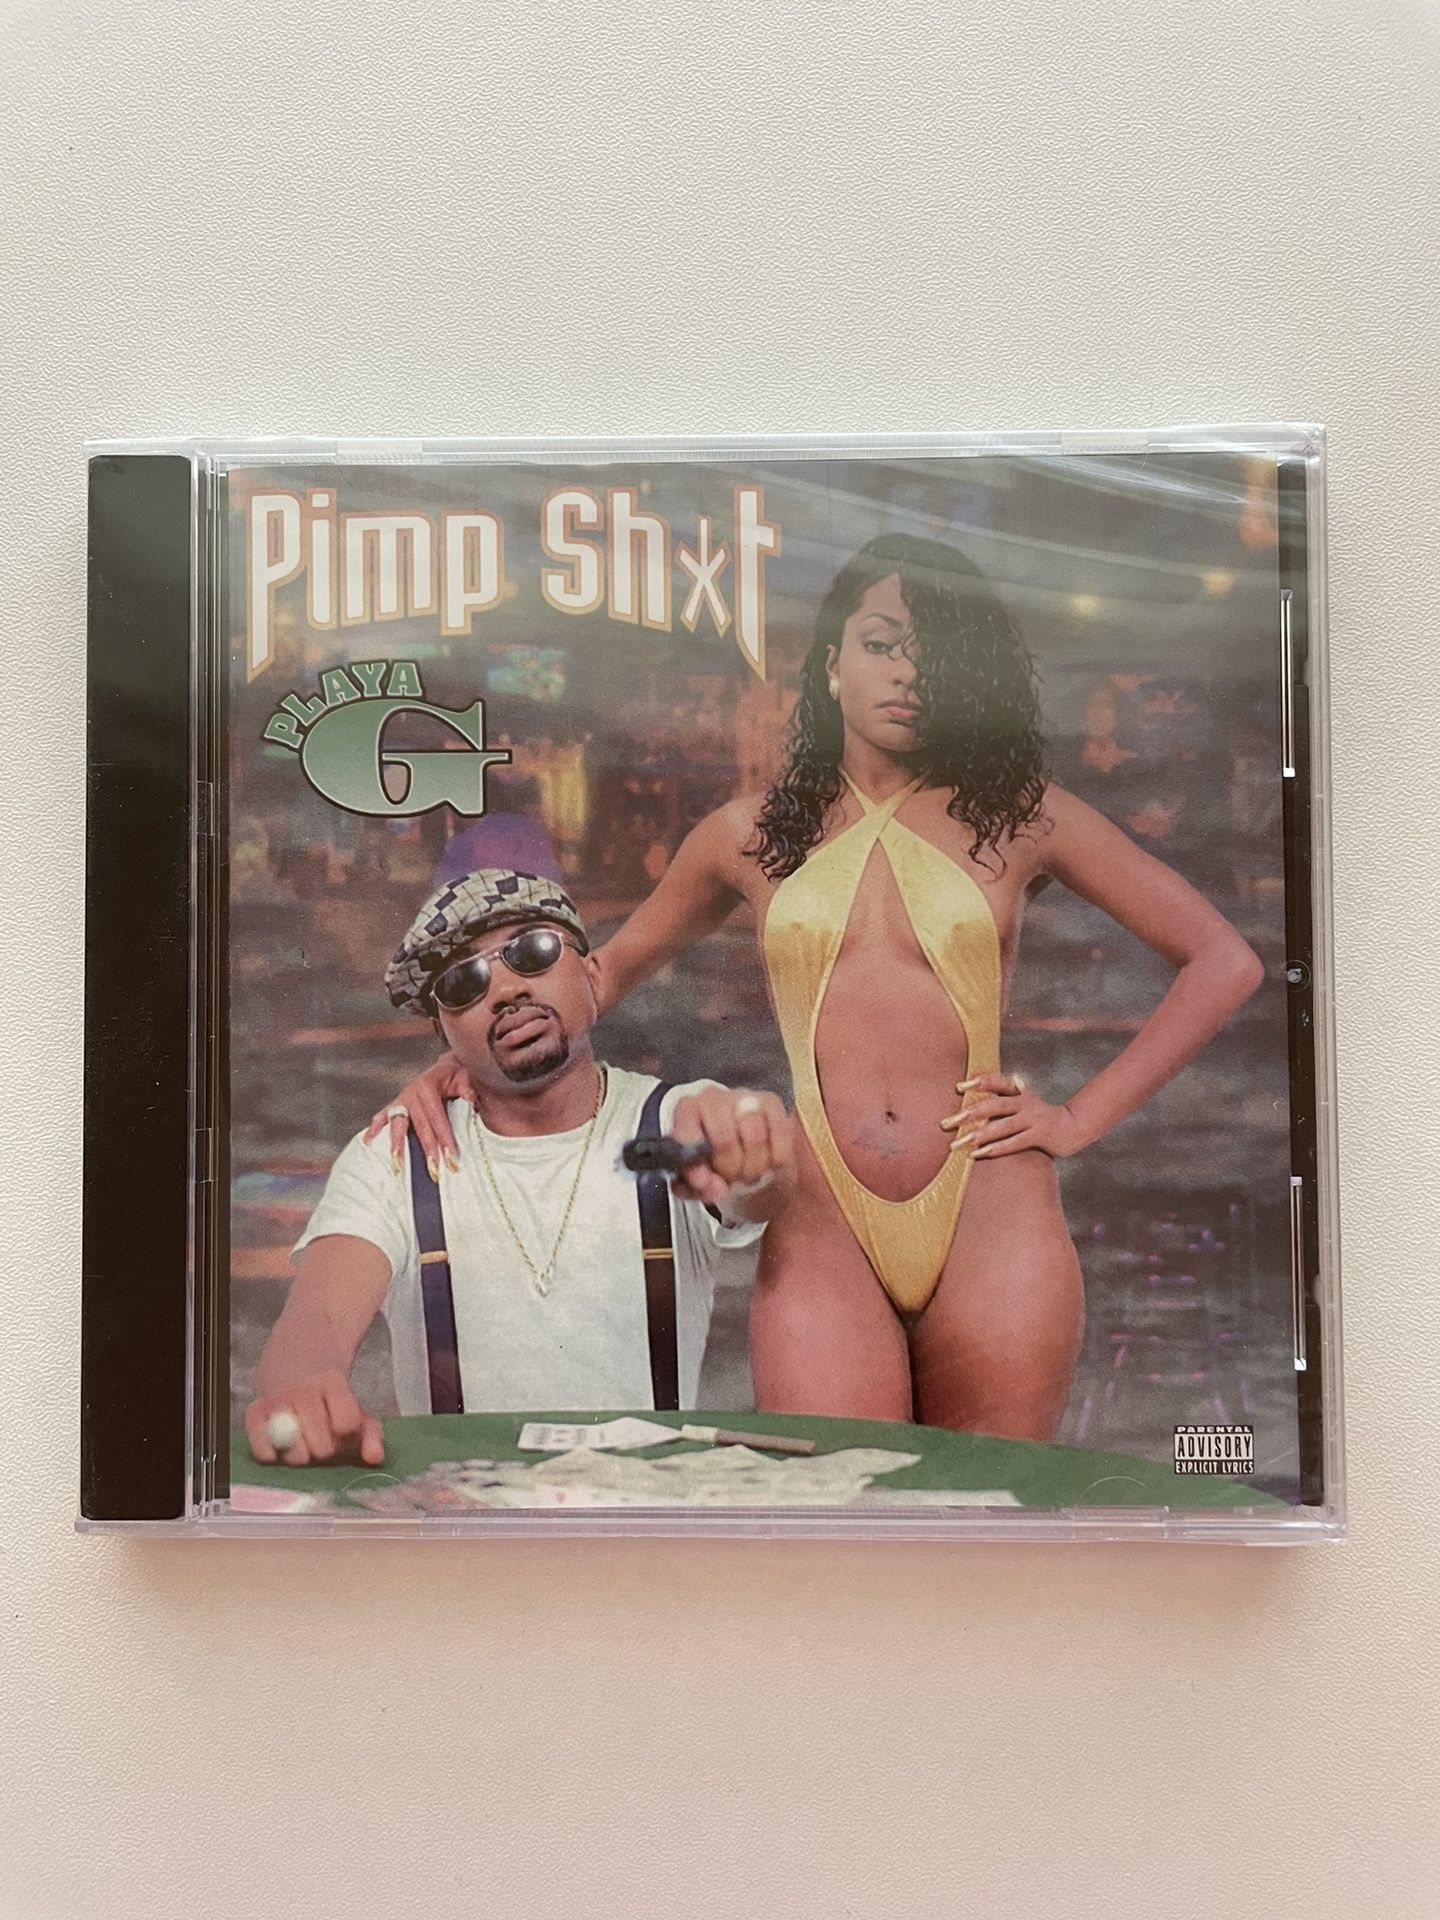 Playa G - Pimp Sh*t CD Reissue / Lil Milt / Gangsta Rap, Hip Hop,G-Funk unsealed